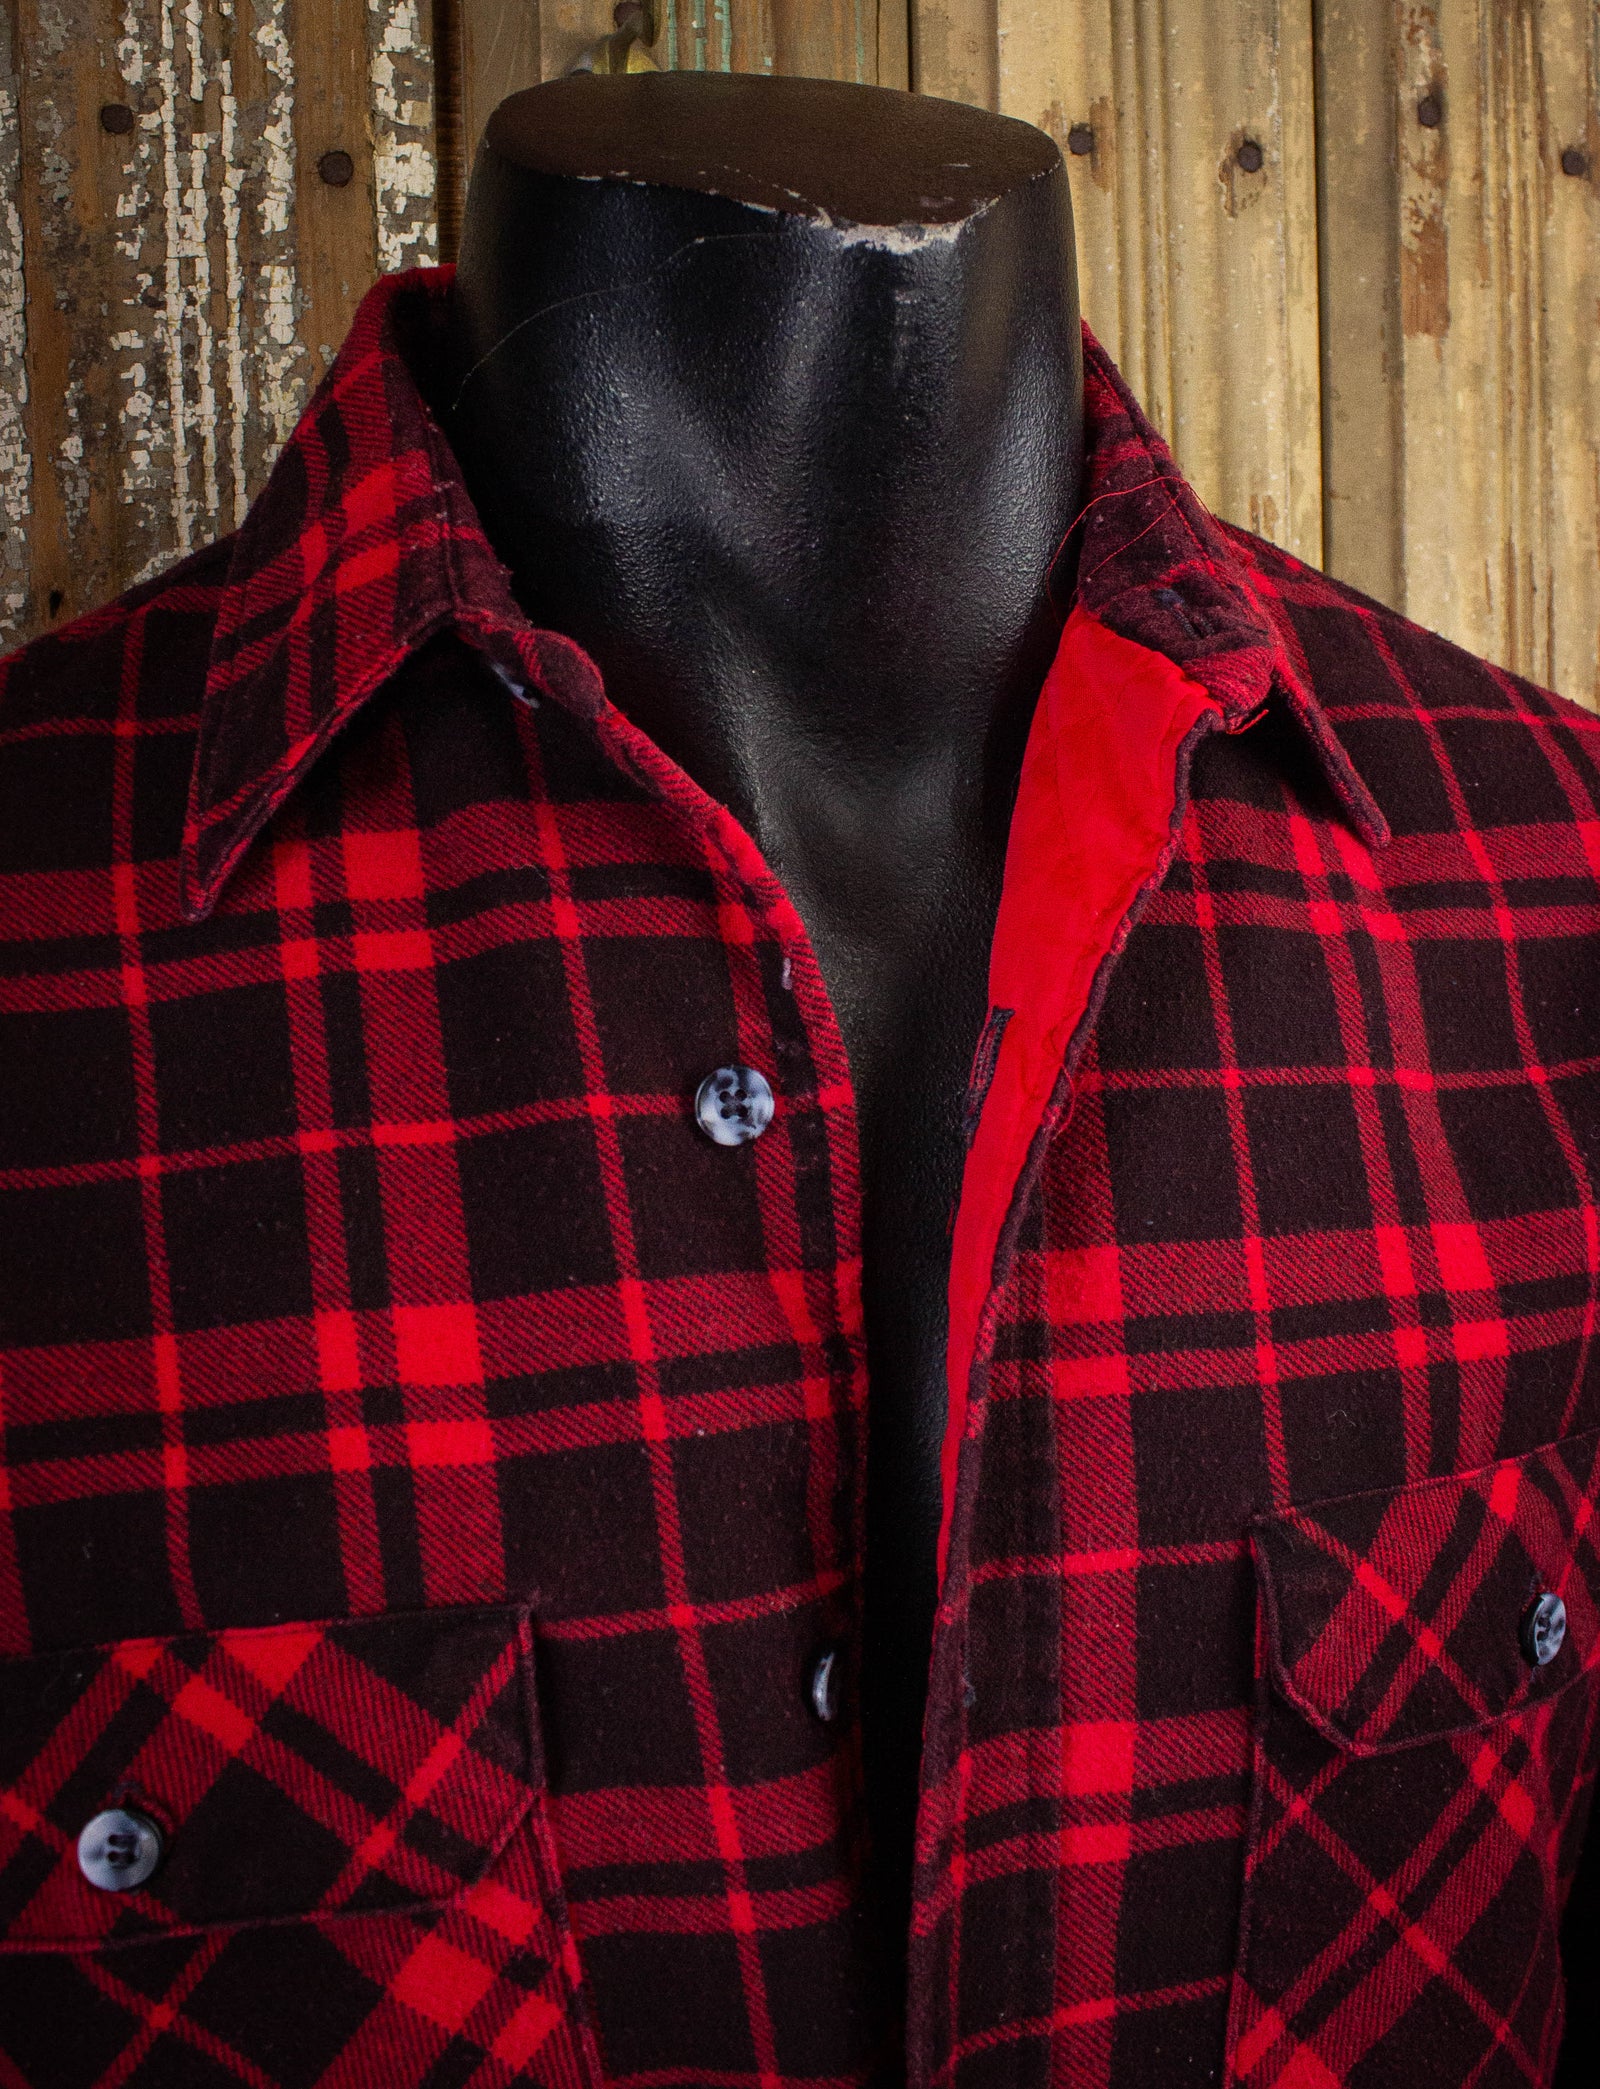 Vintage Fieldmaster Plaid Quilt Lined Flannel Shirt Red/Black Large